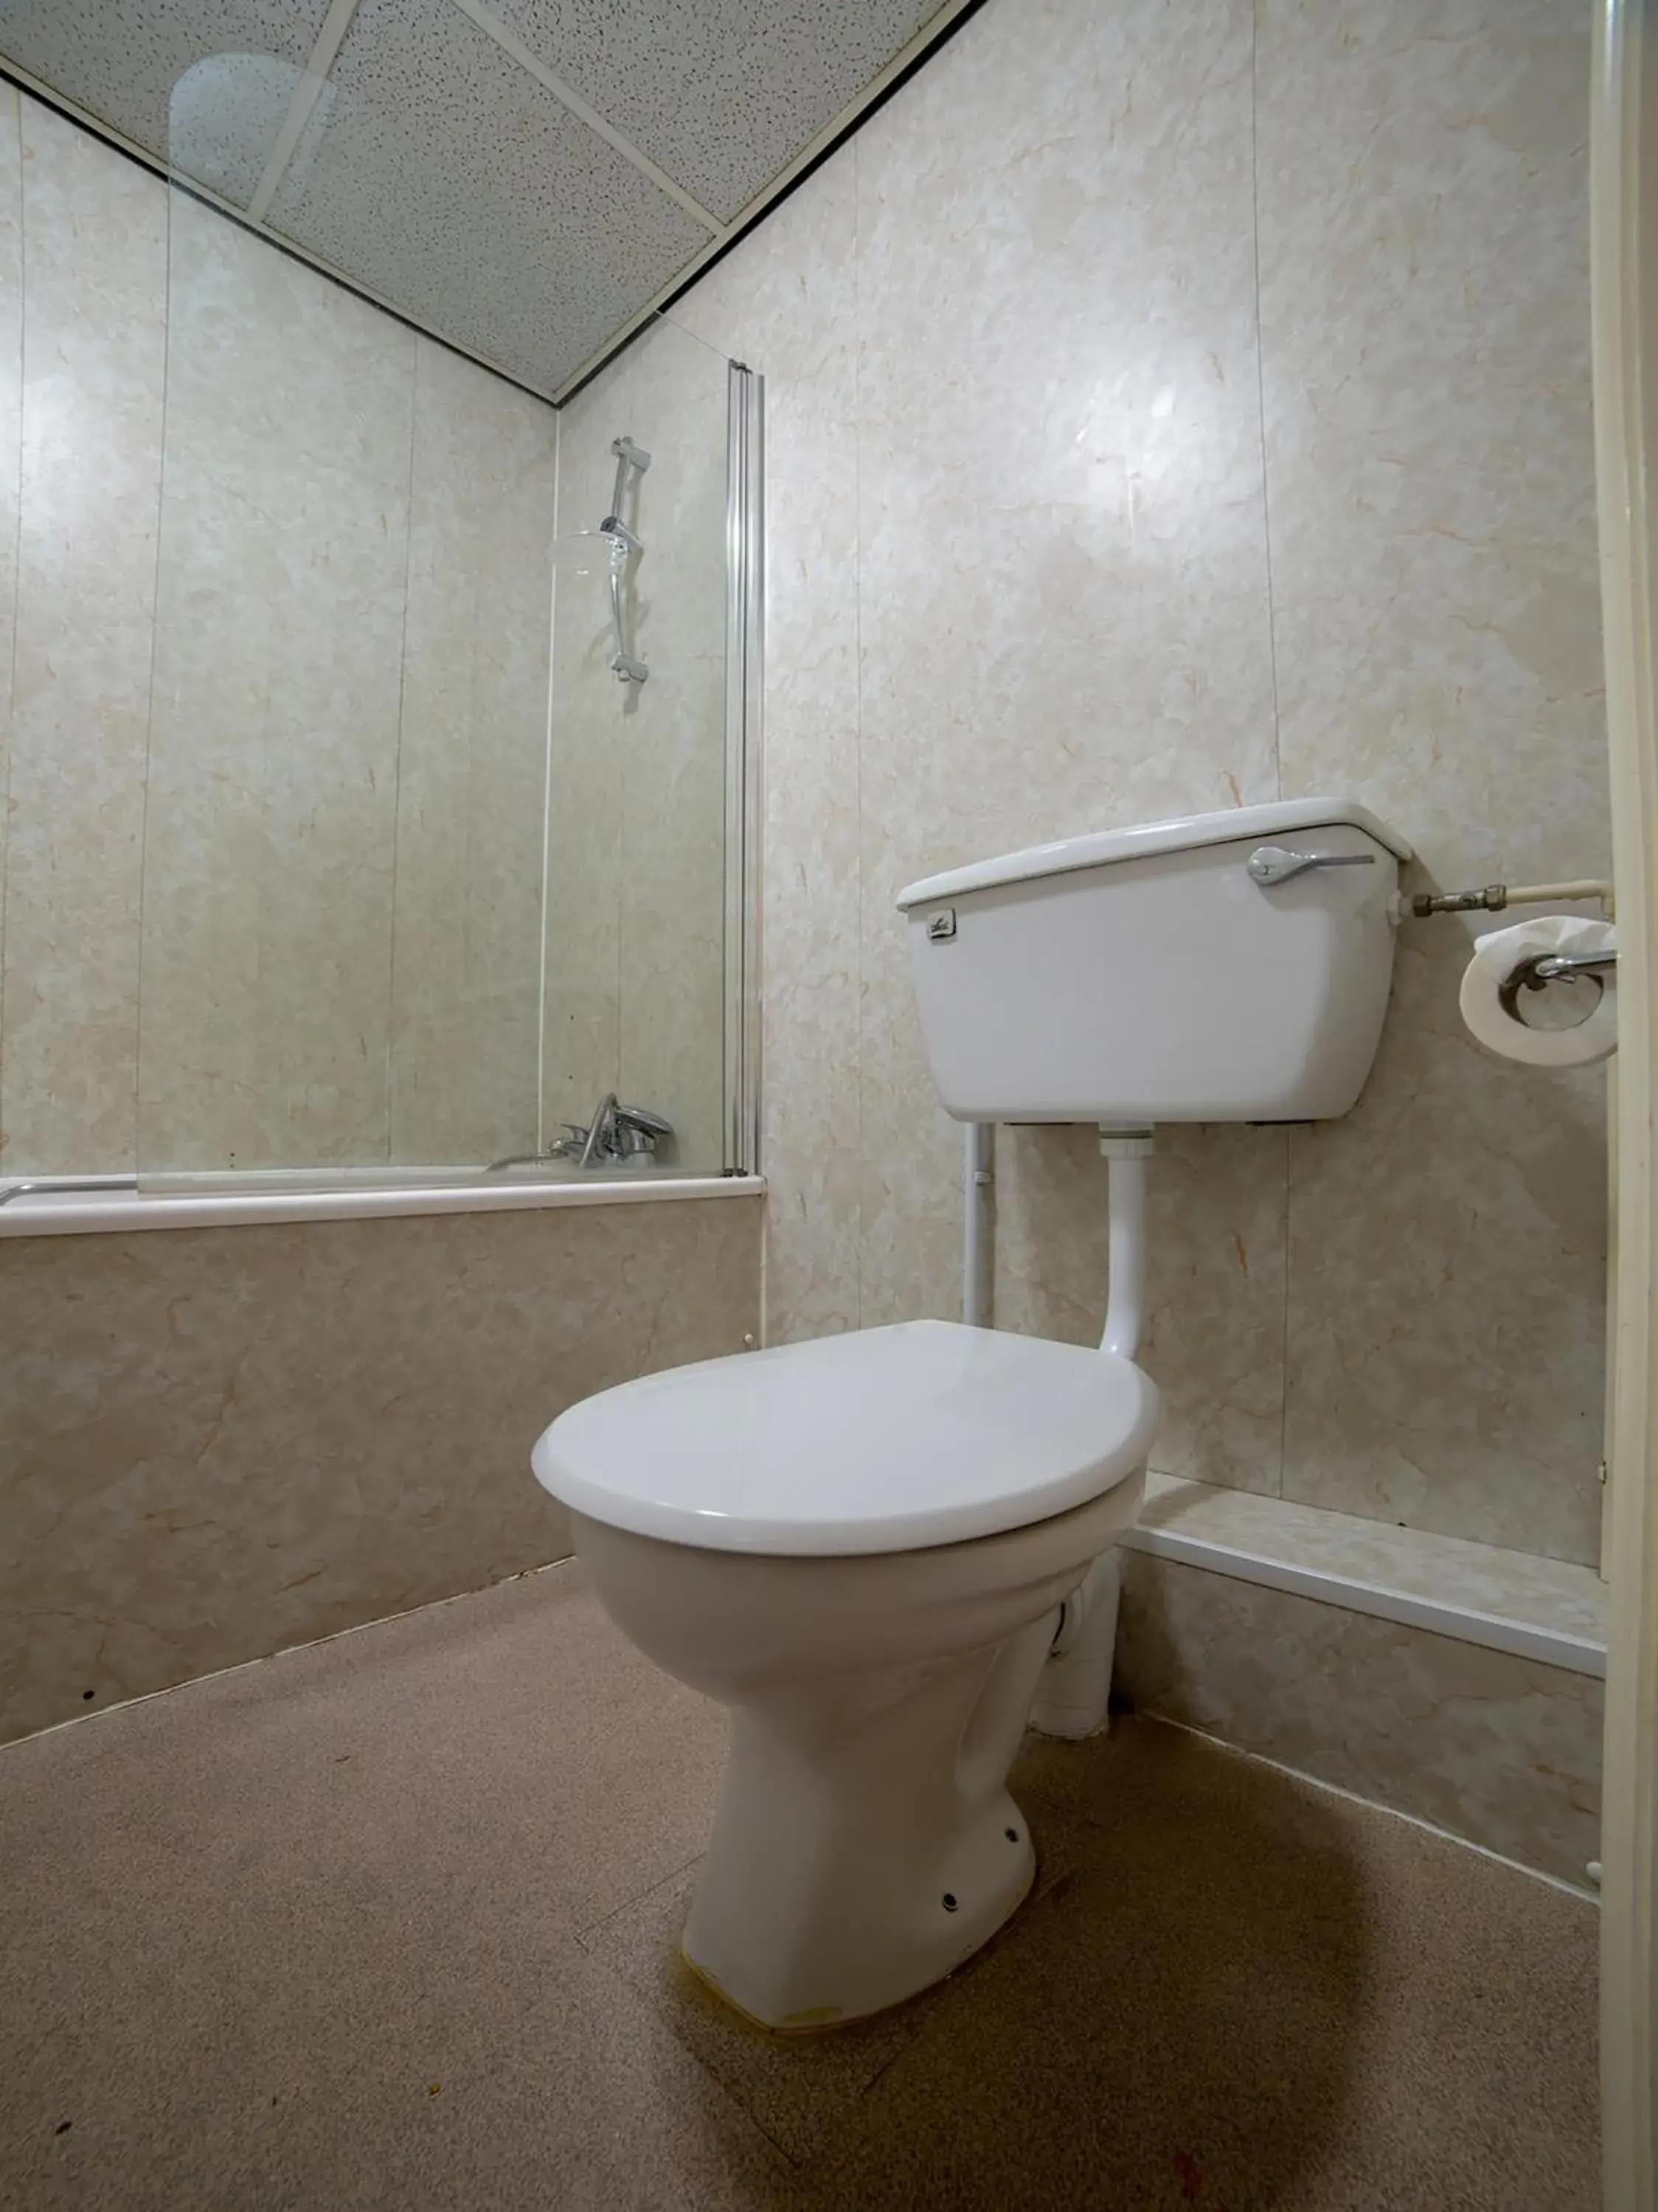 Bathroom in George Hotel, Burslem, Stoke-on-Trent